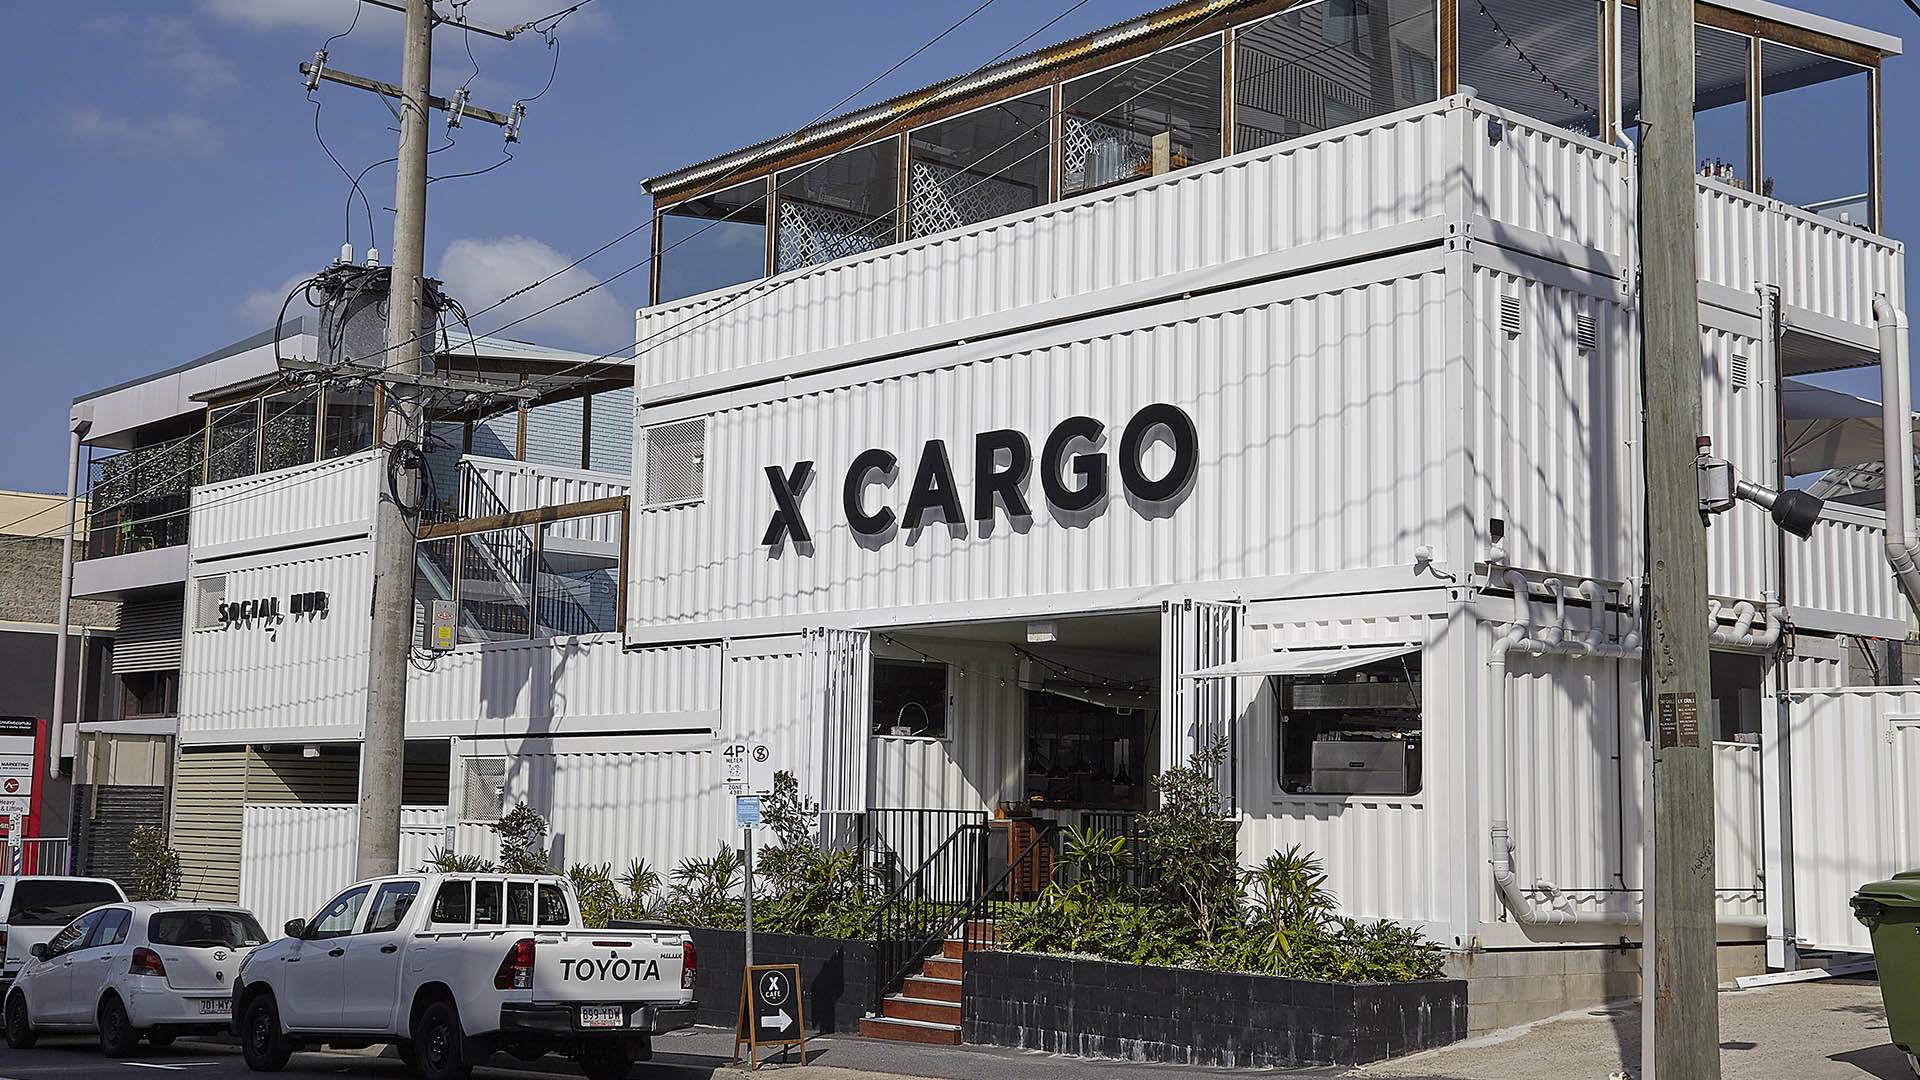 X Cargo Sunday Farmers Market